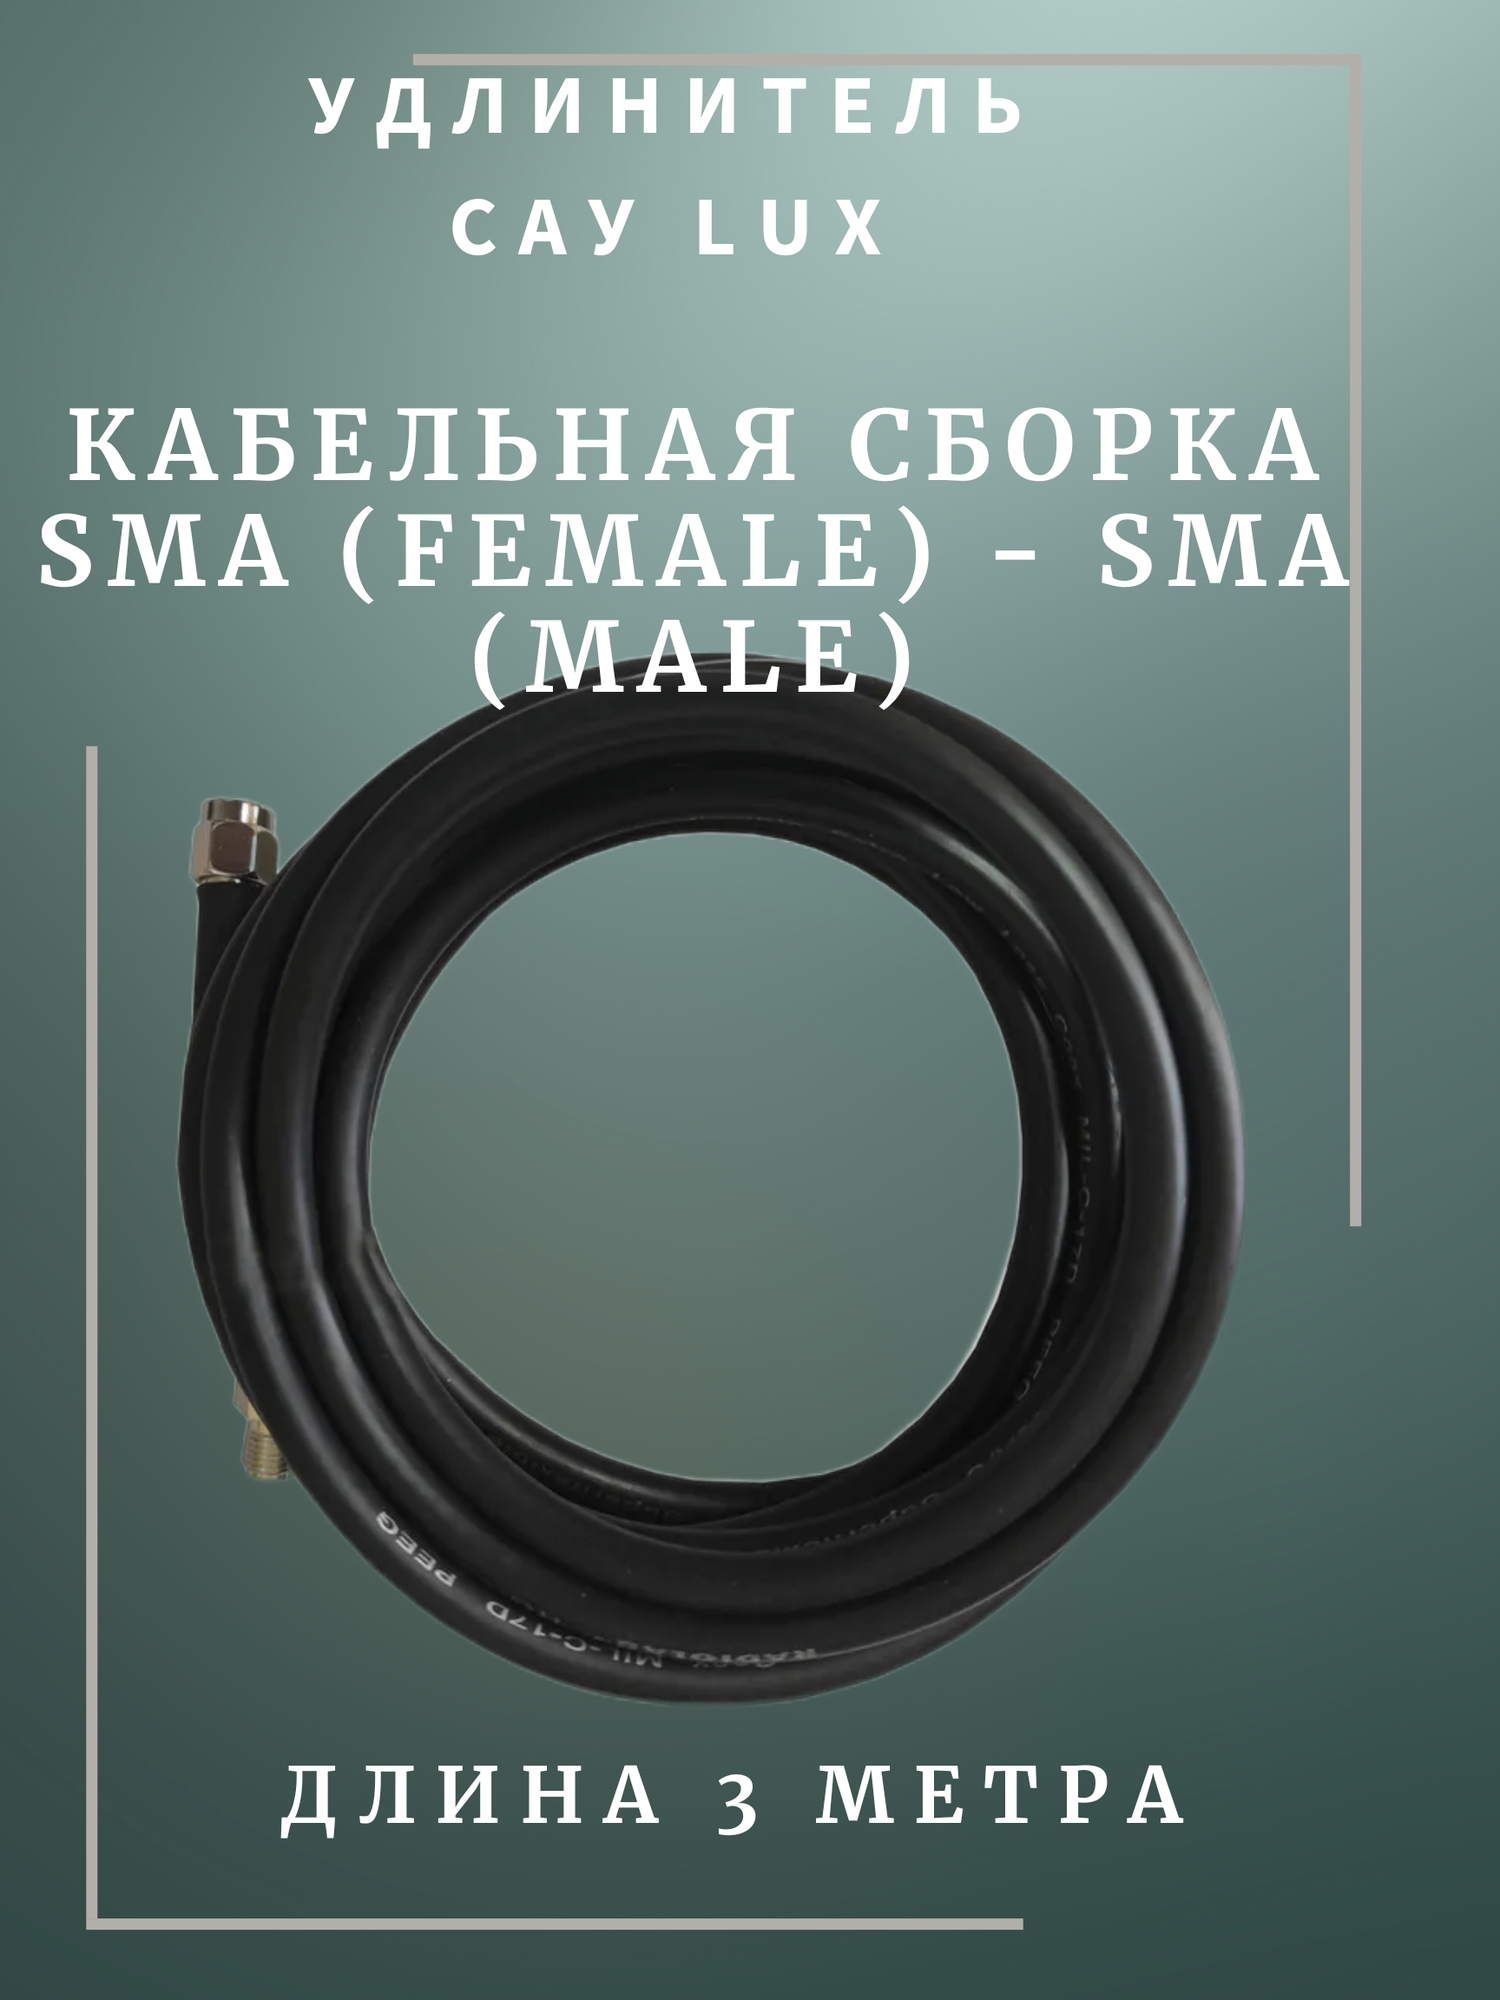 САУ-3 LUX Триада. Кабельная сборка SMA (female) - SMA (male) 3 метра кабель RADIOLAB Rg-58 a/u 50 Ом